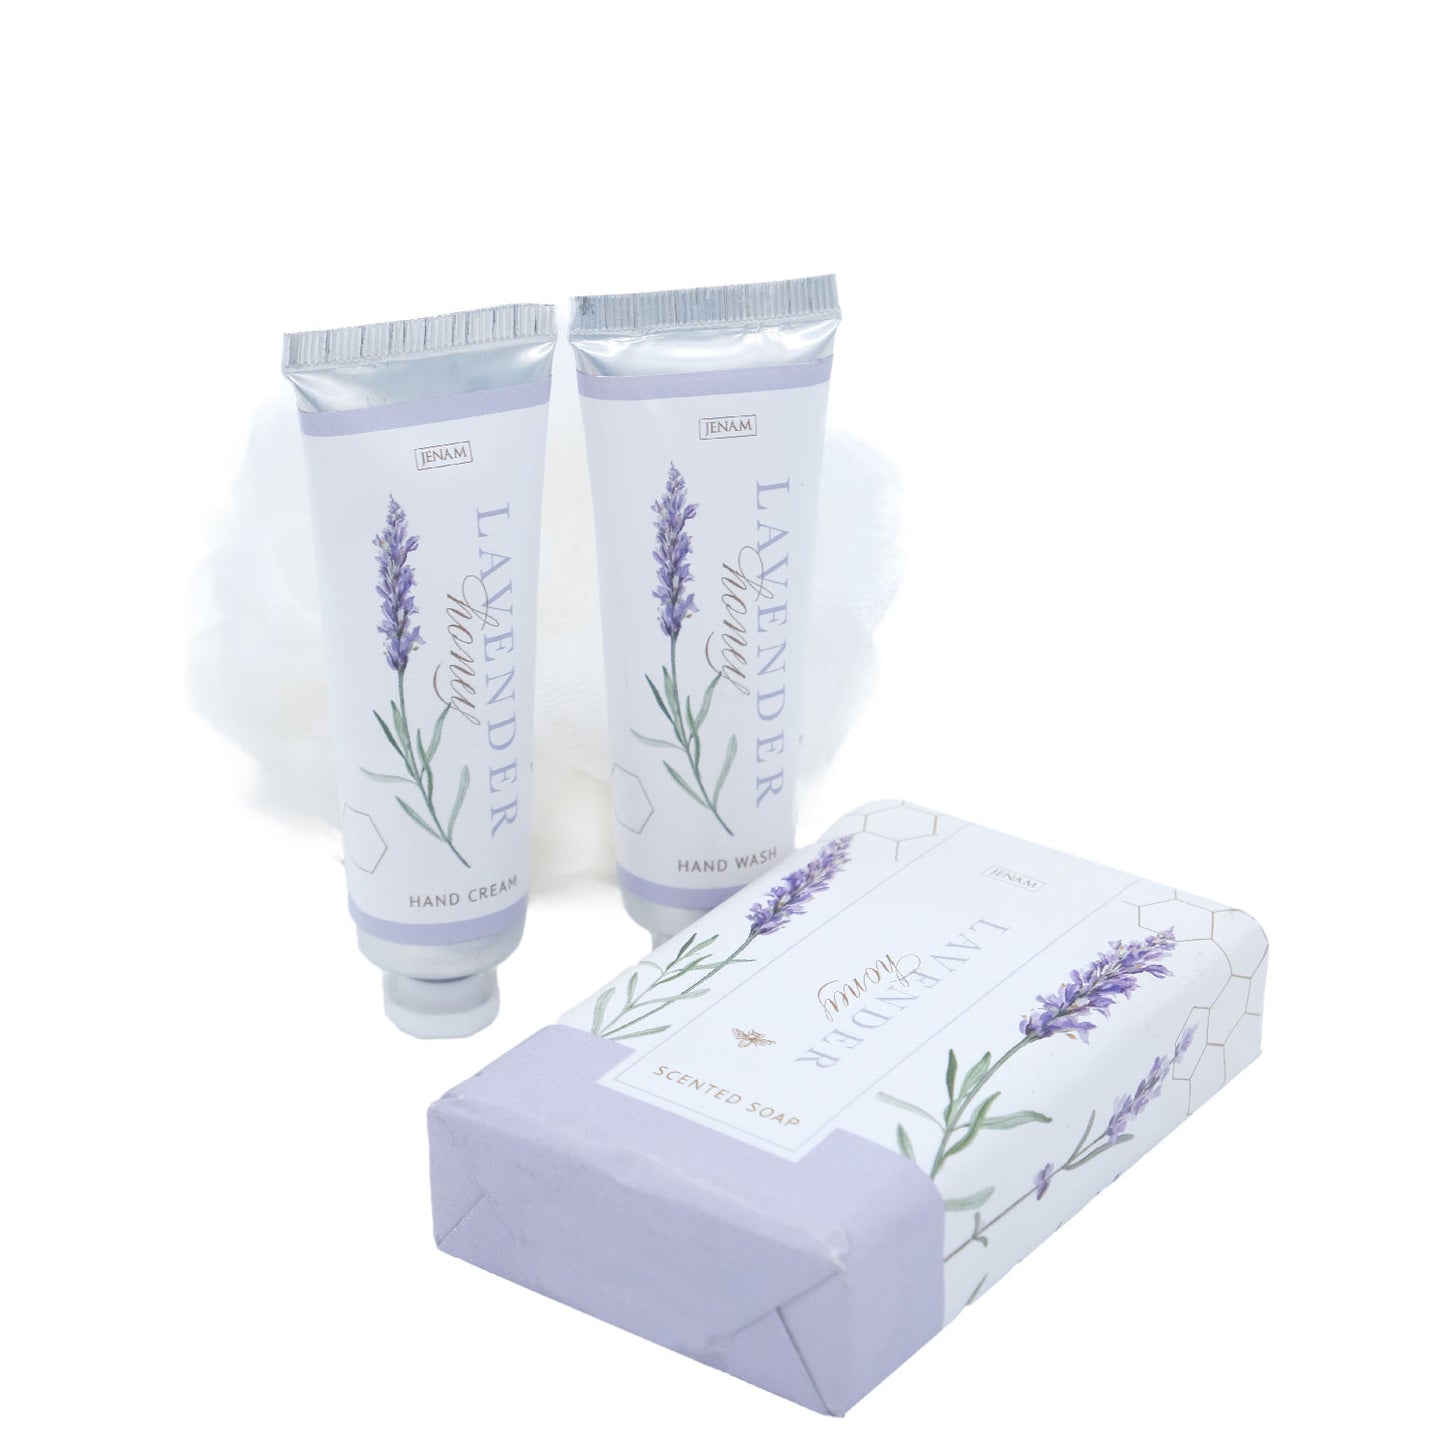 Lavender & Honey Body Care Trio - 30ml Hand Cream, 30ml Hand Wash, 200g Soap & 20g Mesh Sponge